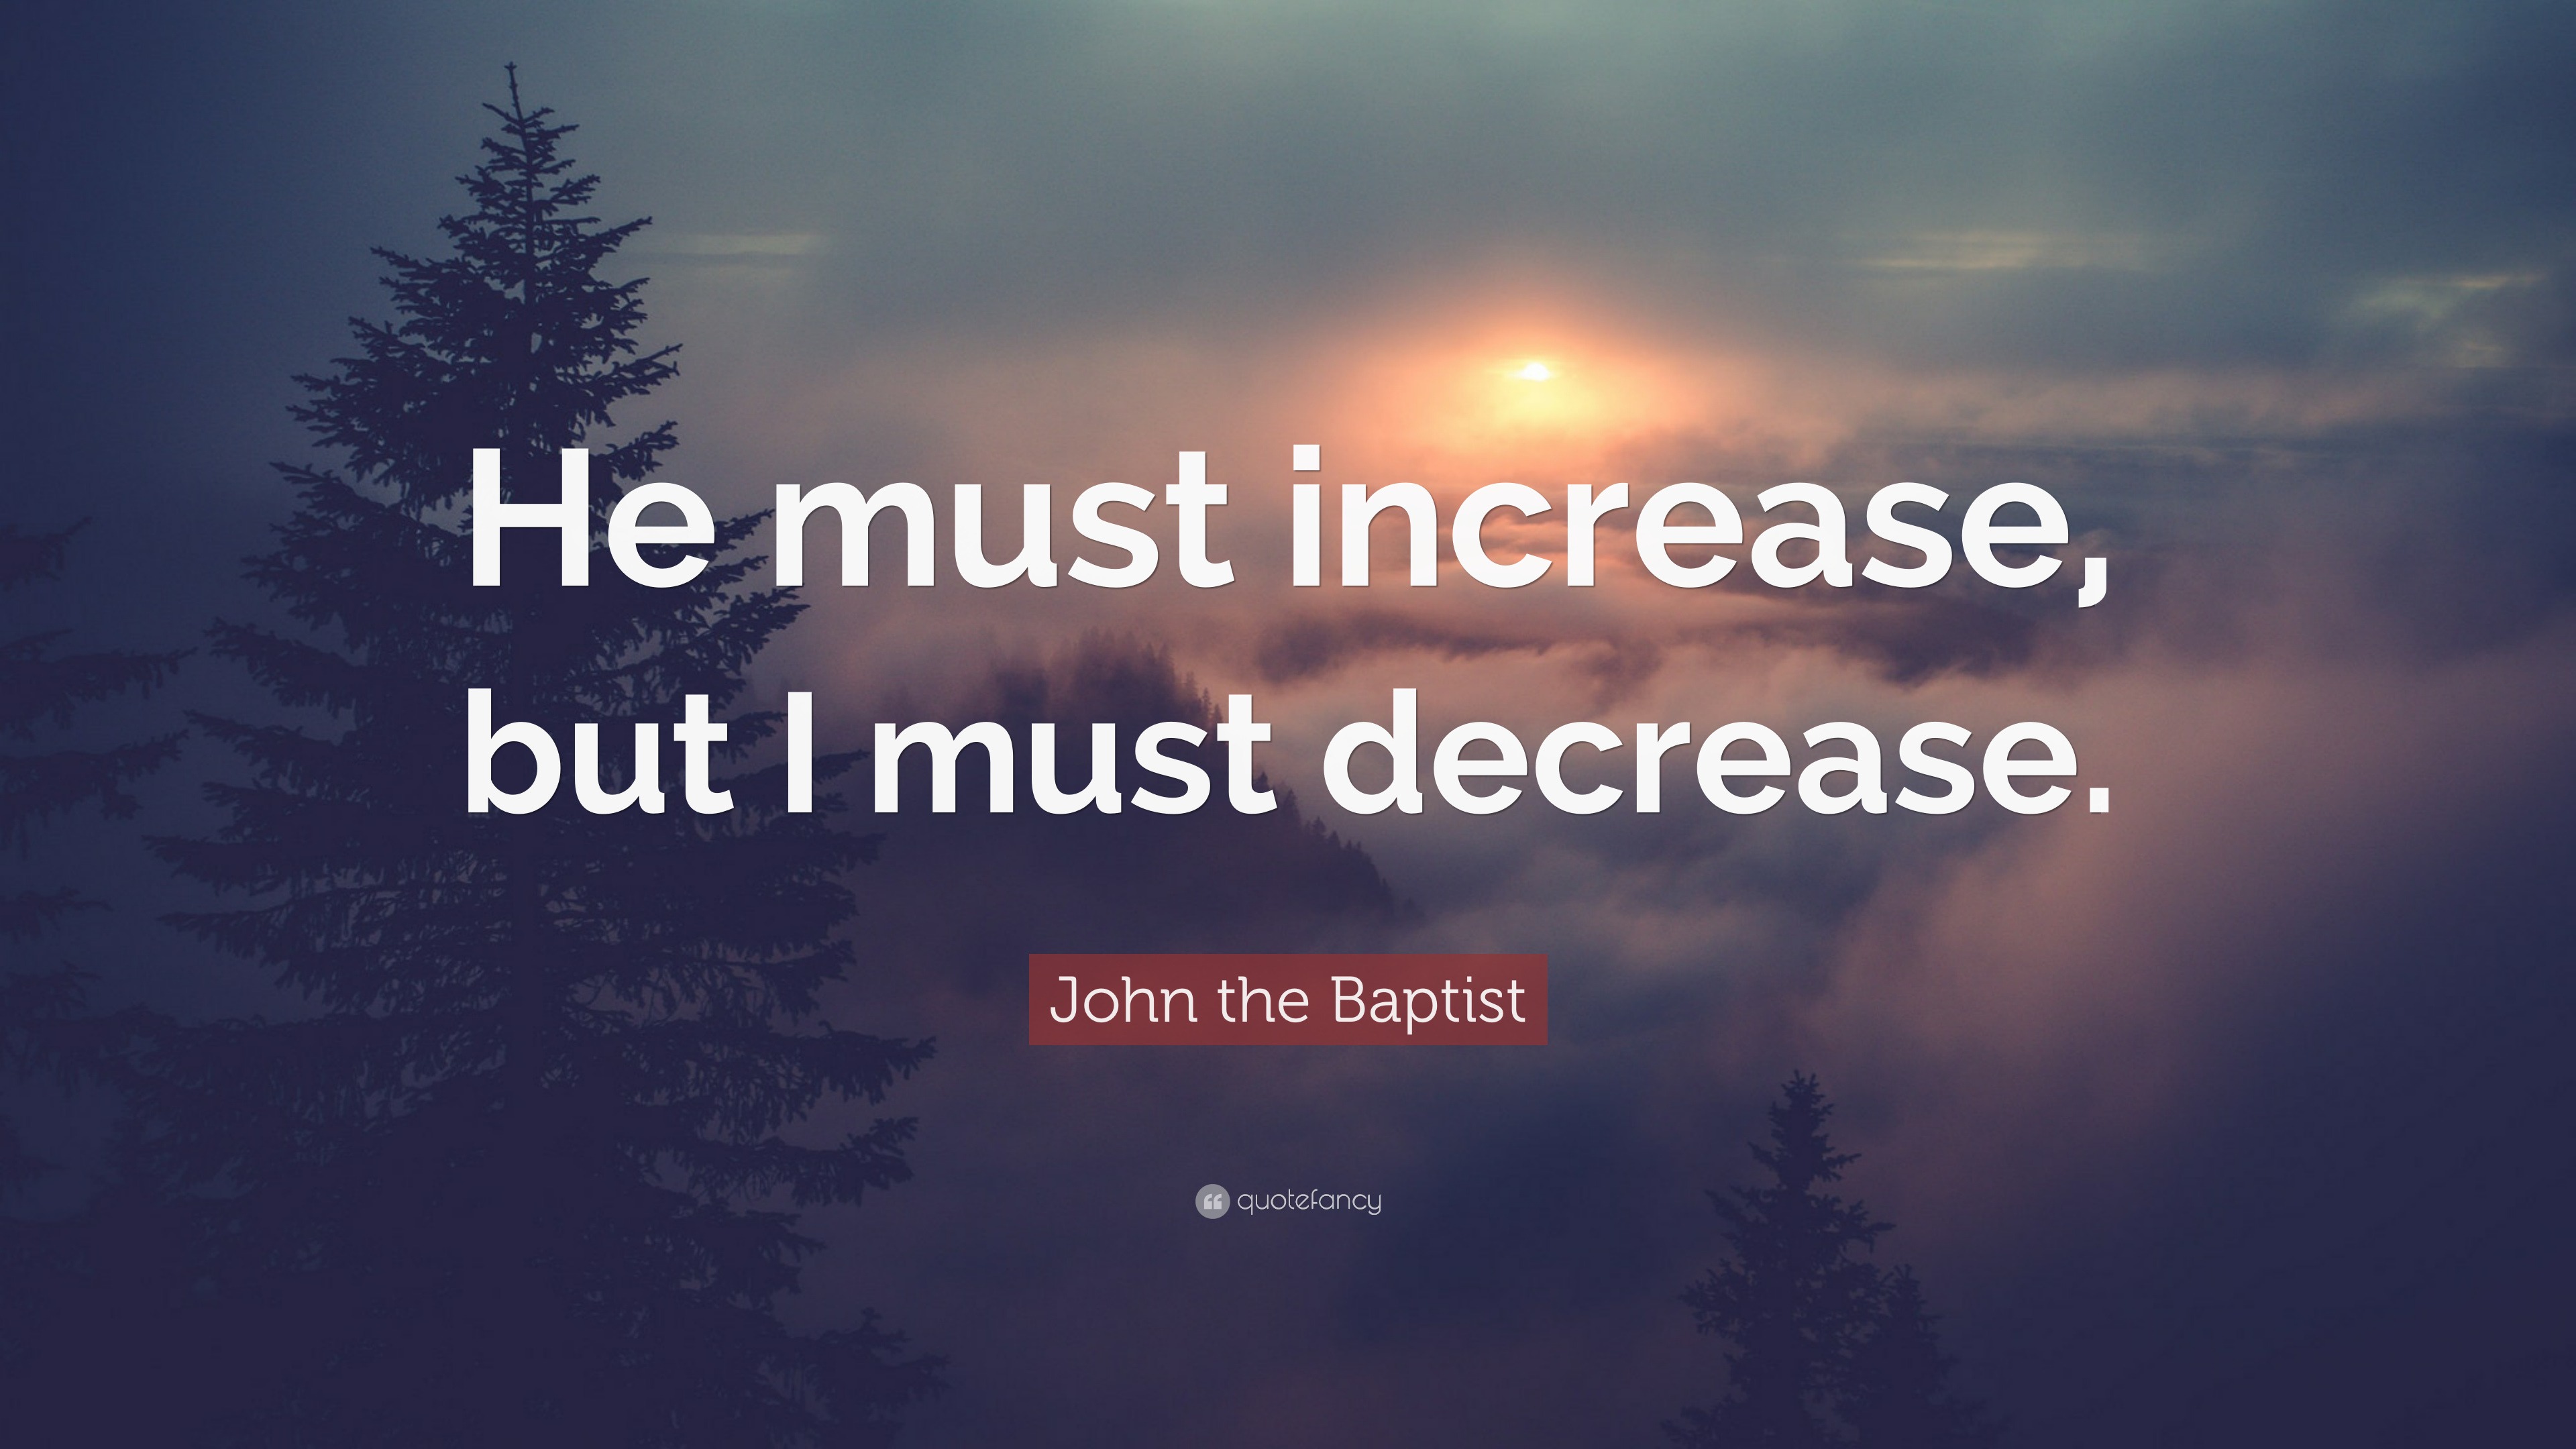 John the Baptist Quote: 